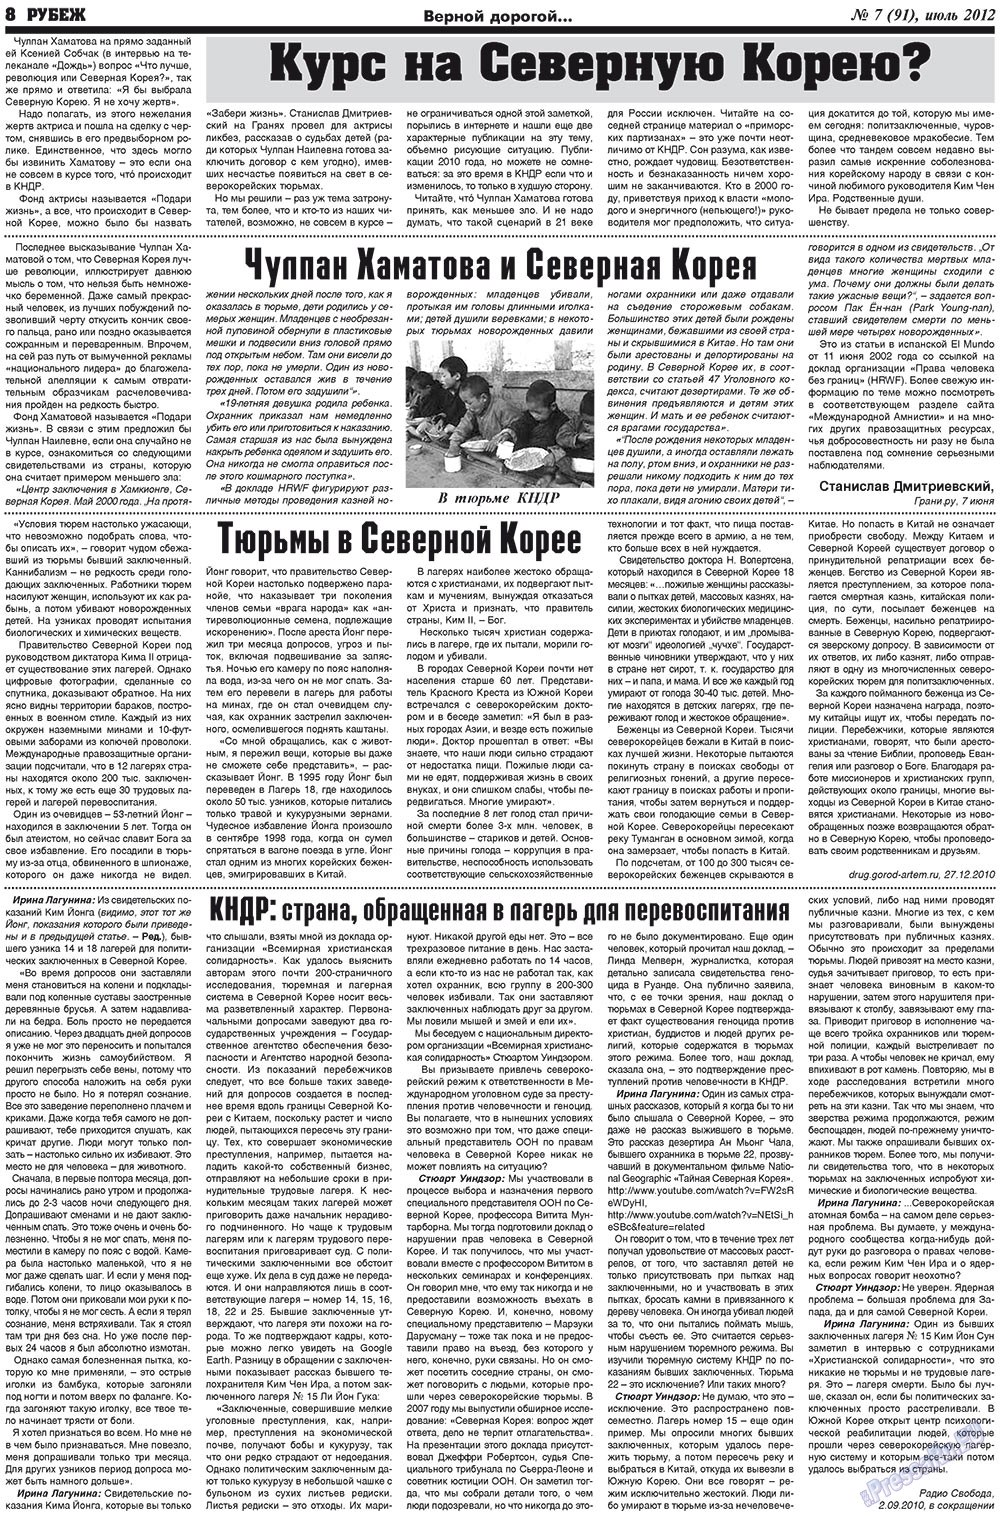 Рубеж, газета. 2012 №7 стр.8